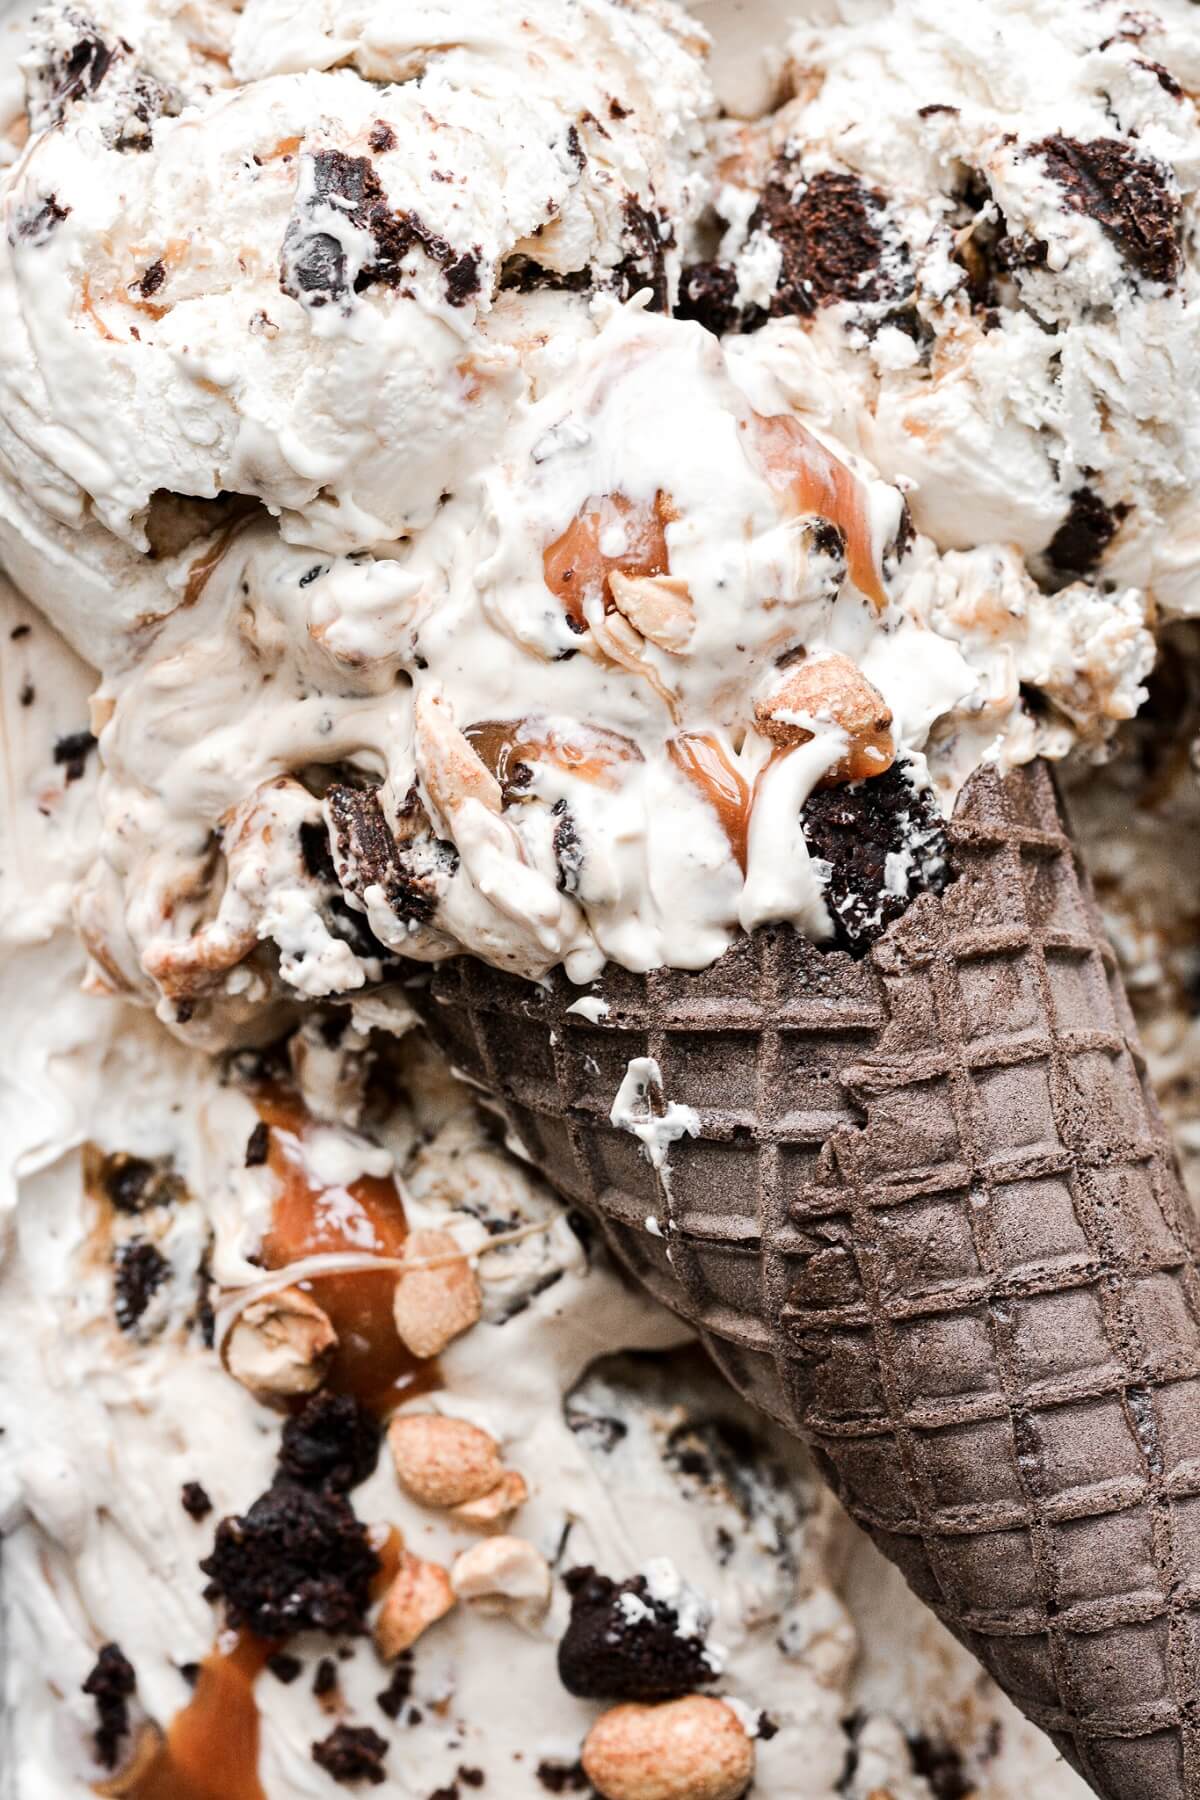 Chocolate ice cream cone with brownie sundae ice cream.